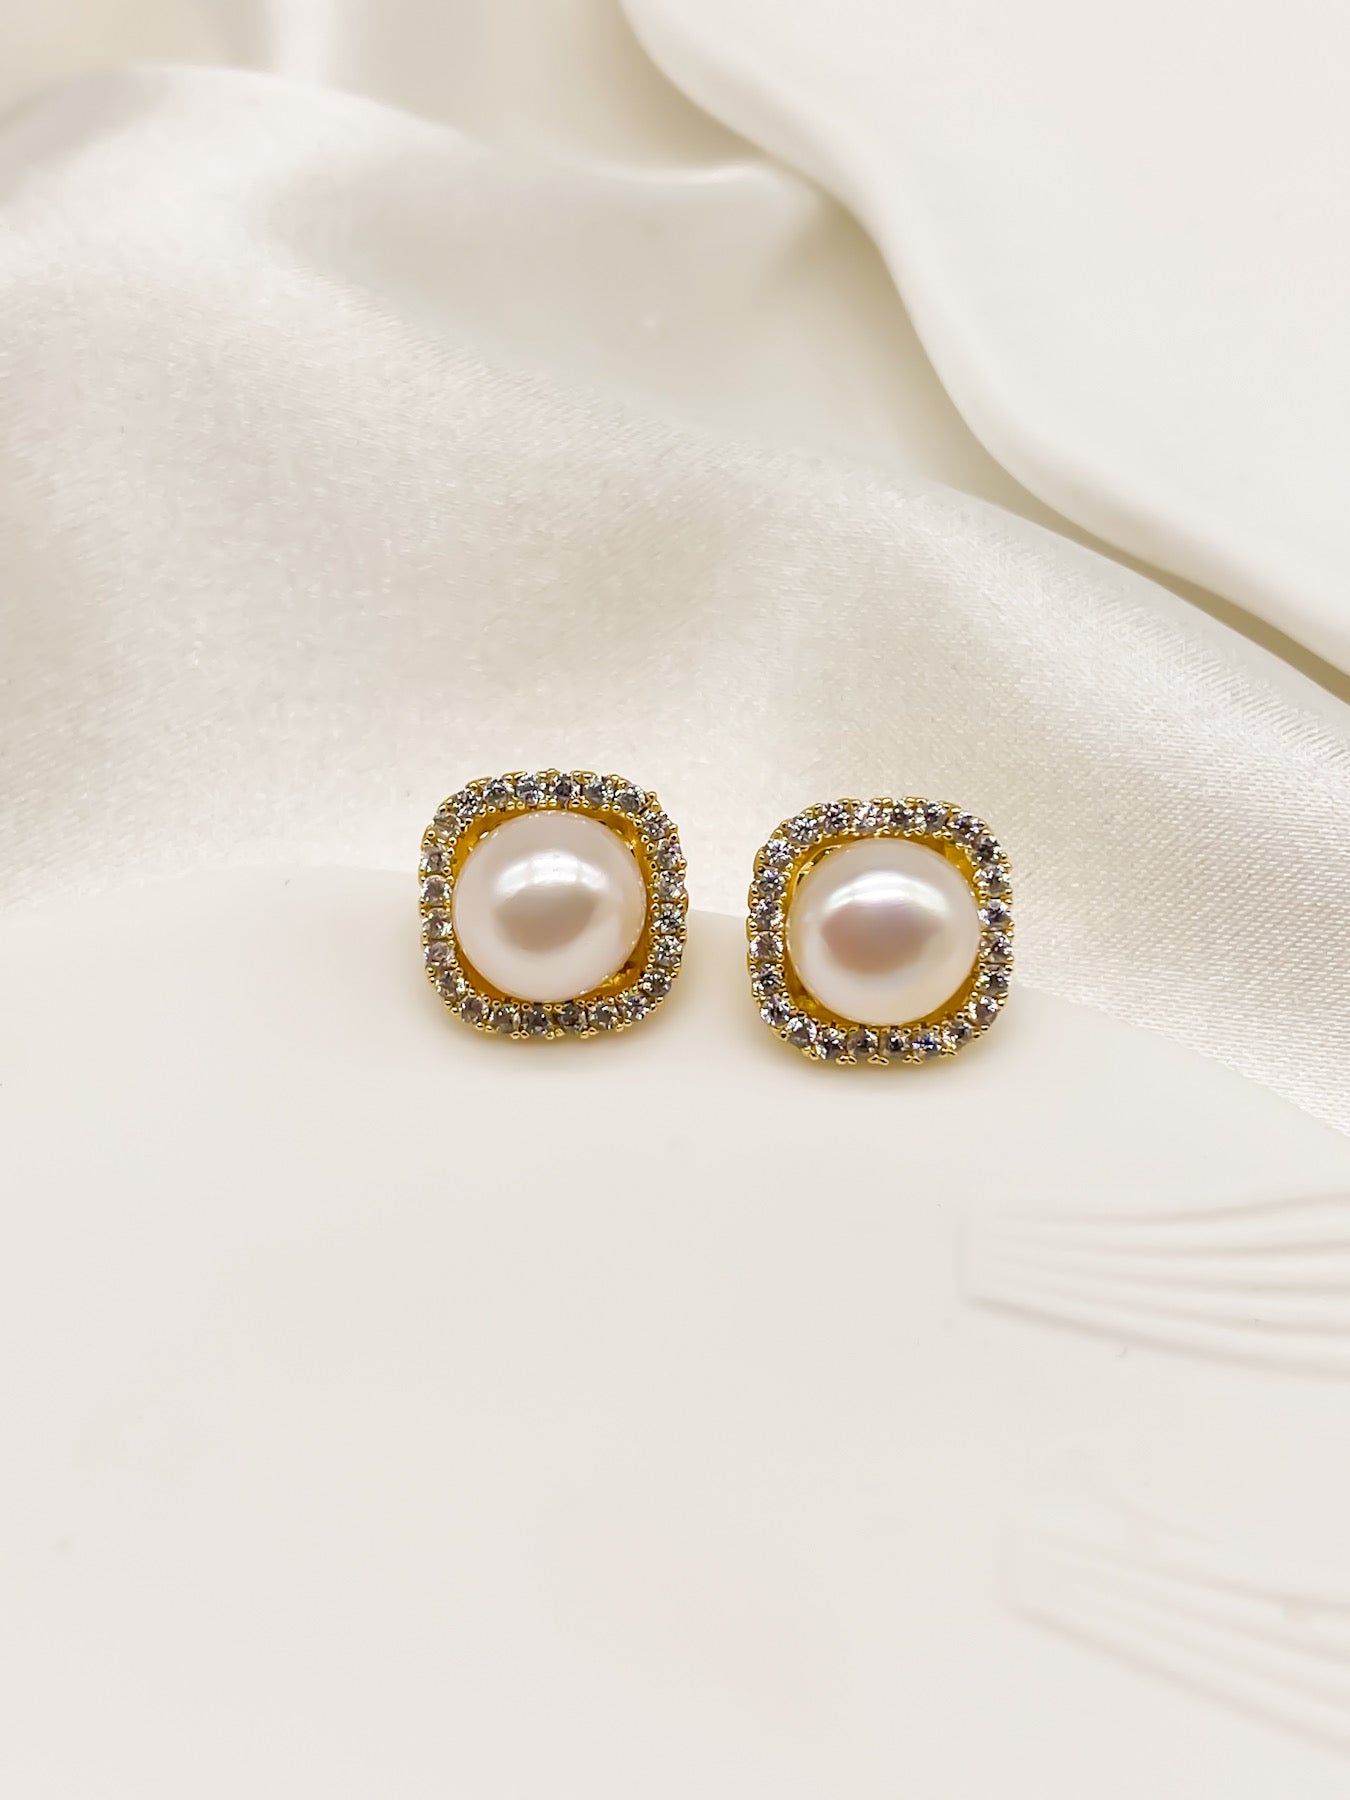 SKYE Shop Chic Modern Elegant Classy Women Jewelry French Parisian Minimalist Alexandra Freshwater Pearl Stud Earrings 5